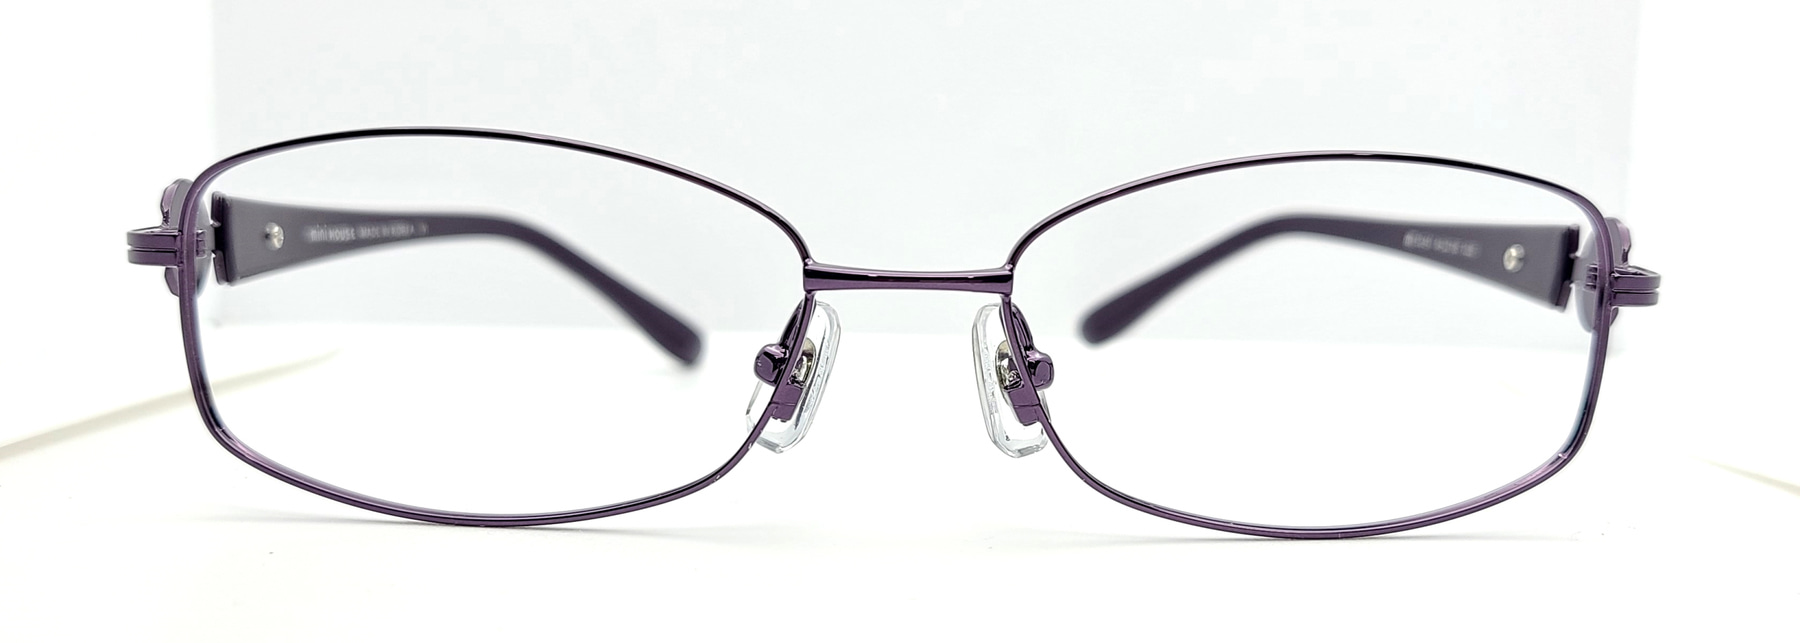 MINIHOUSE M-1241, Korean glasses, sunglasses, eyeglasses, glasses